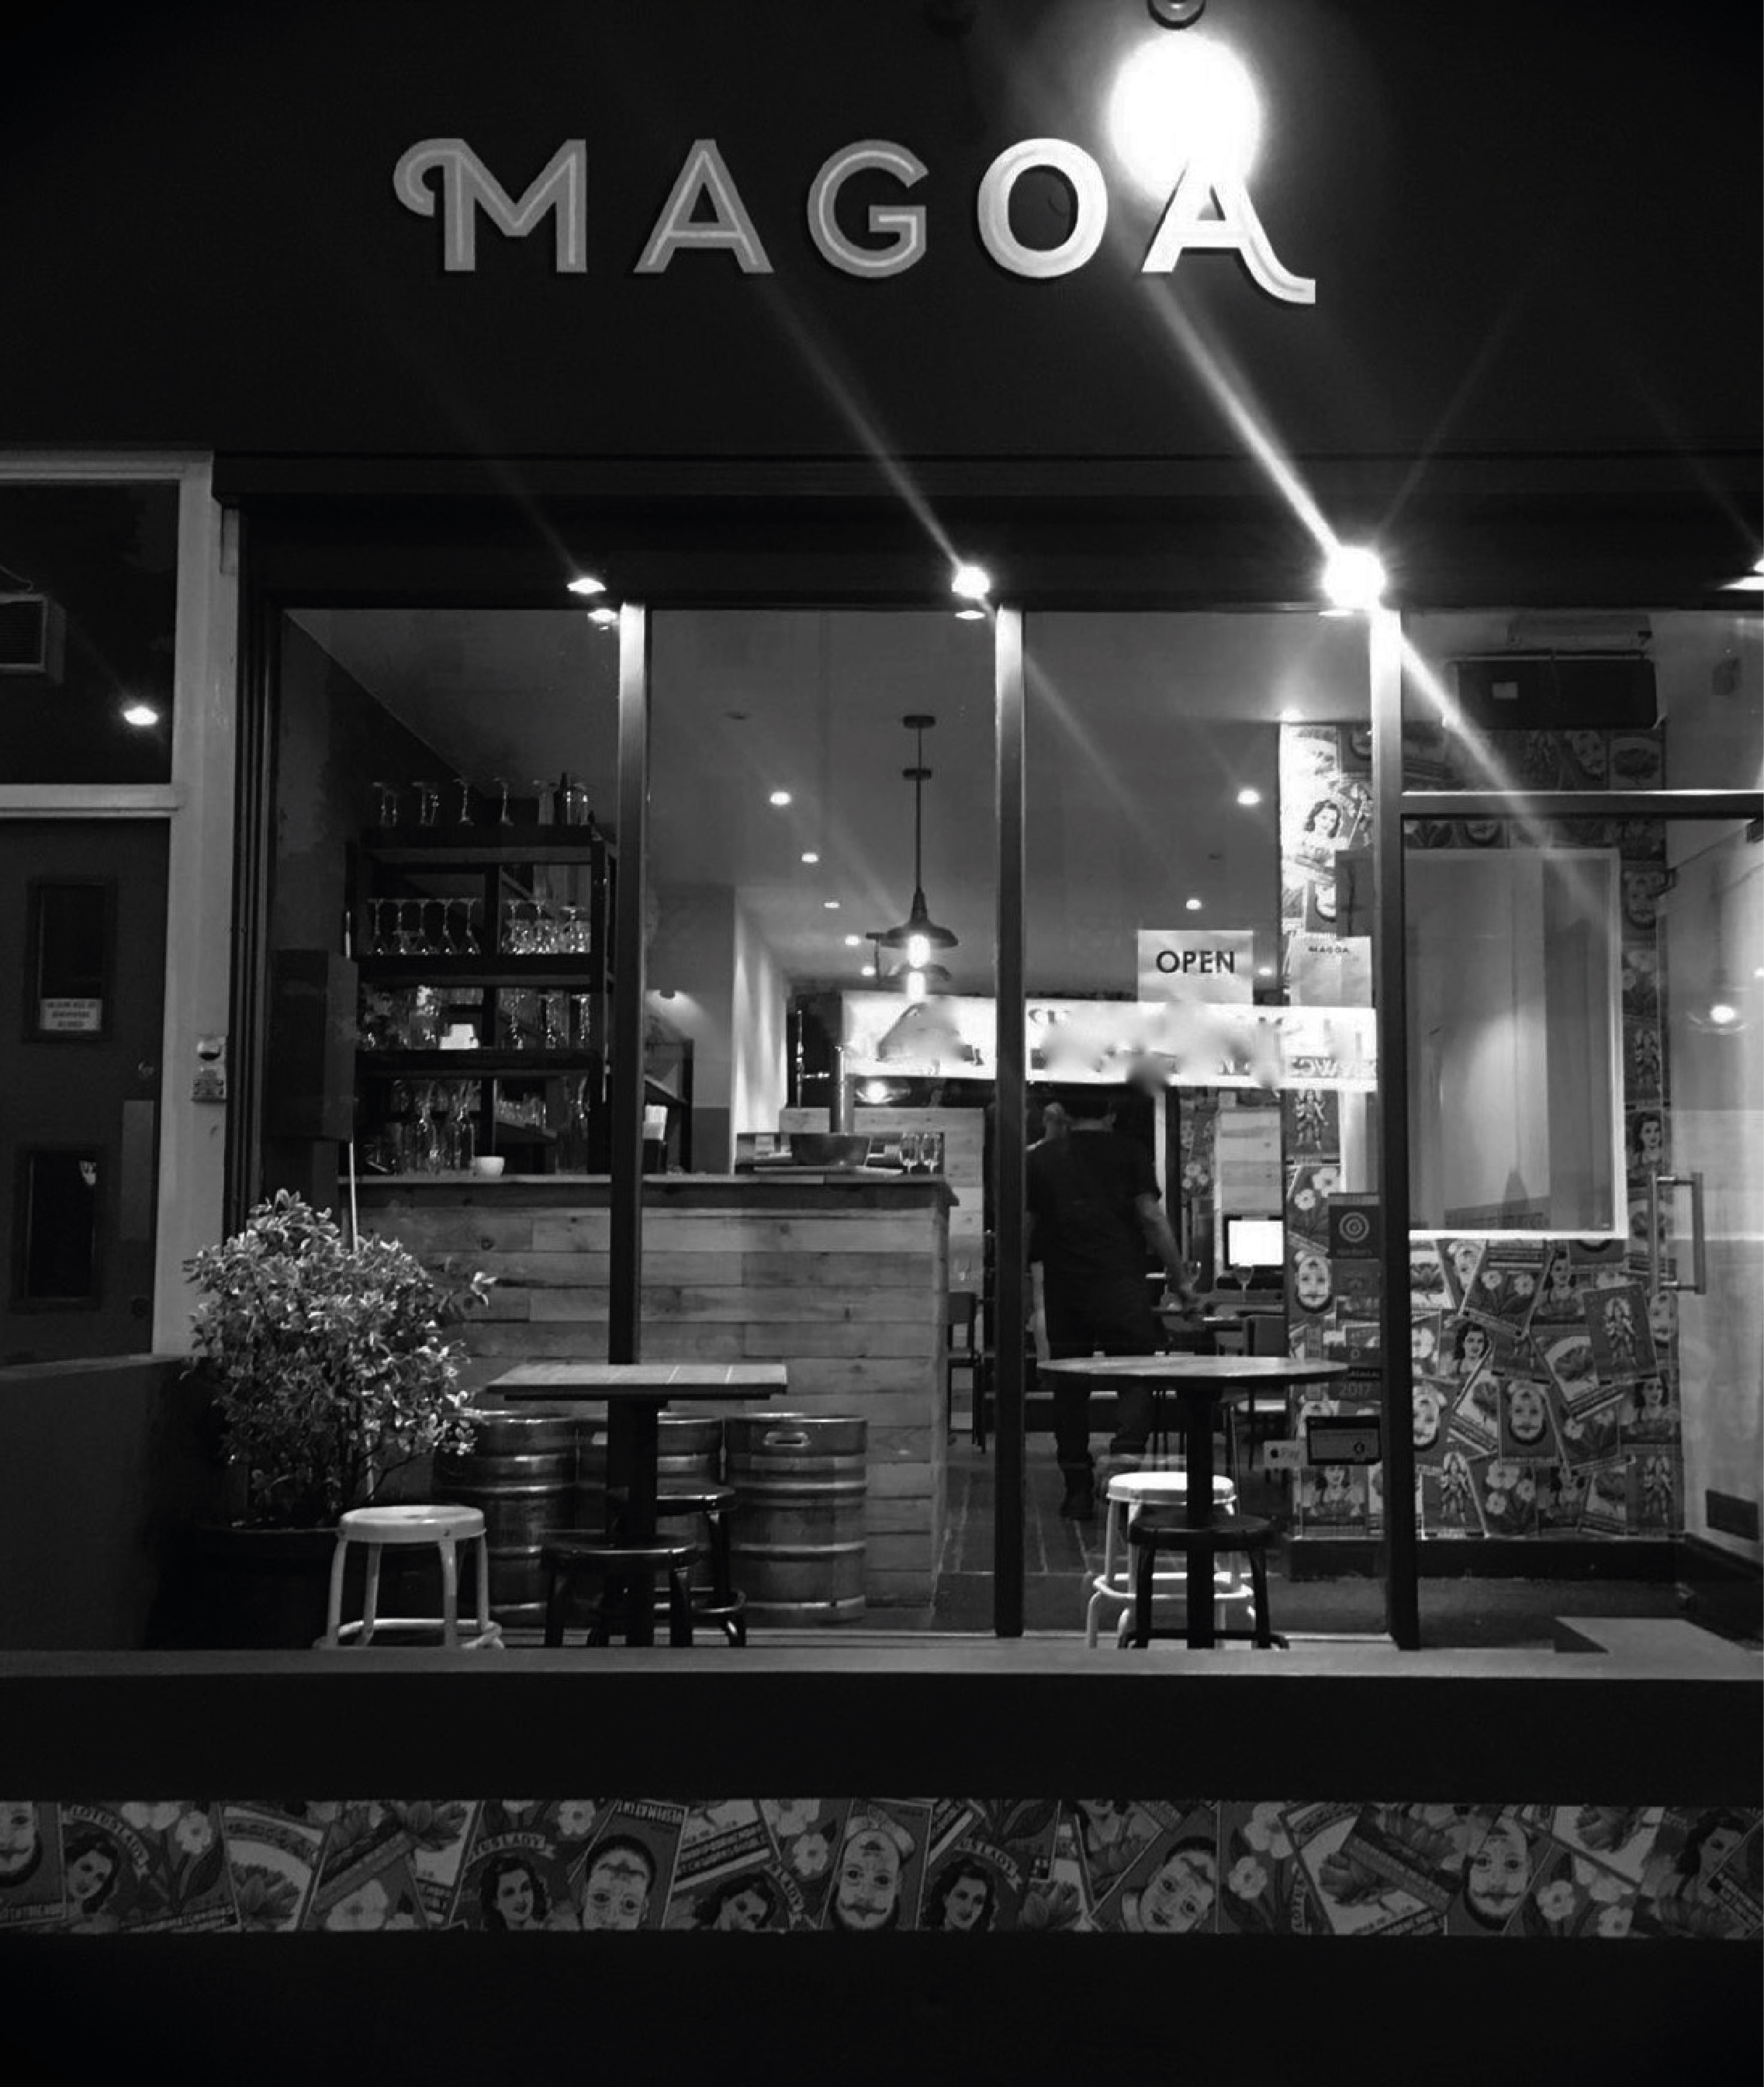 Graphic Designer London. Magoa restaurant storefront in black and white colour